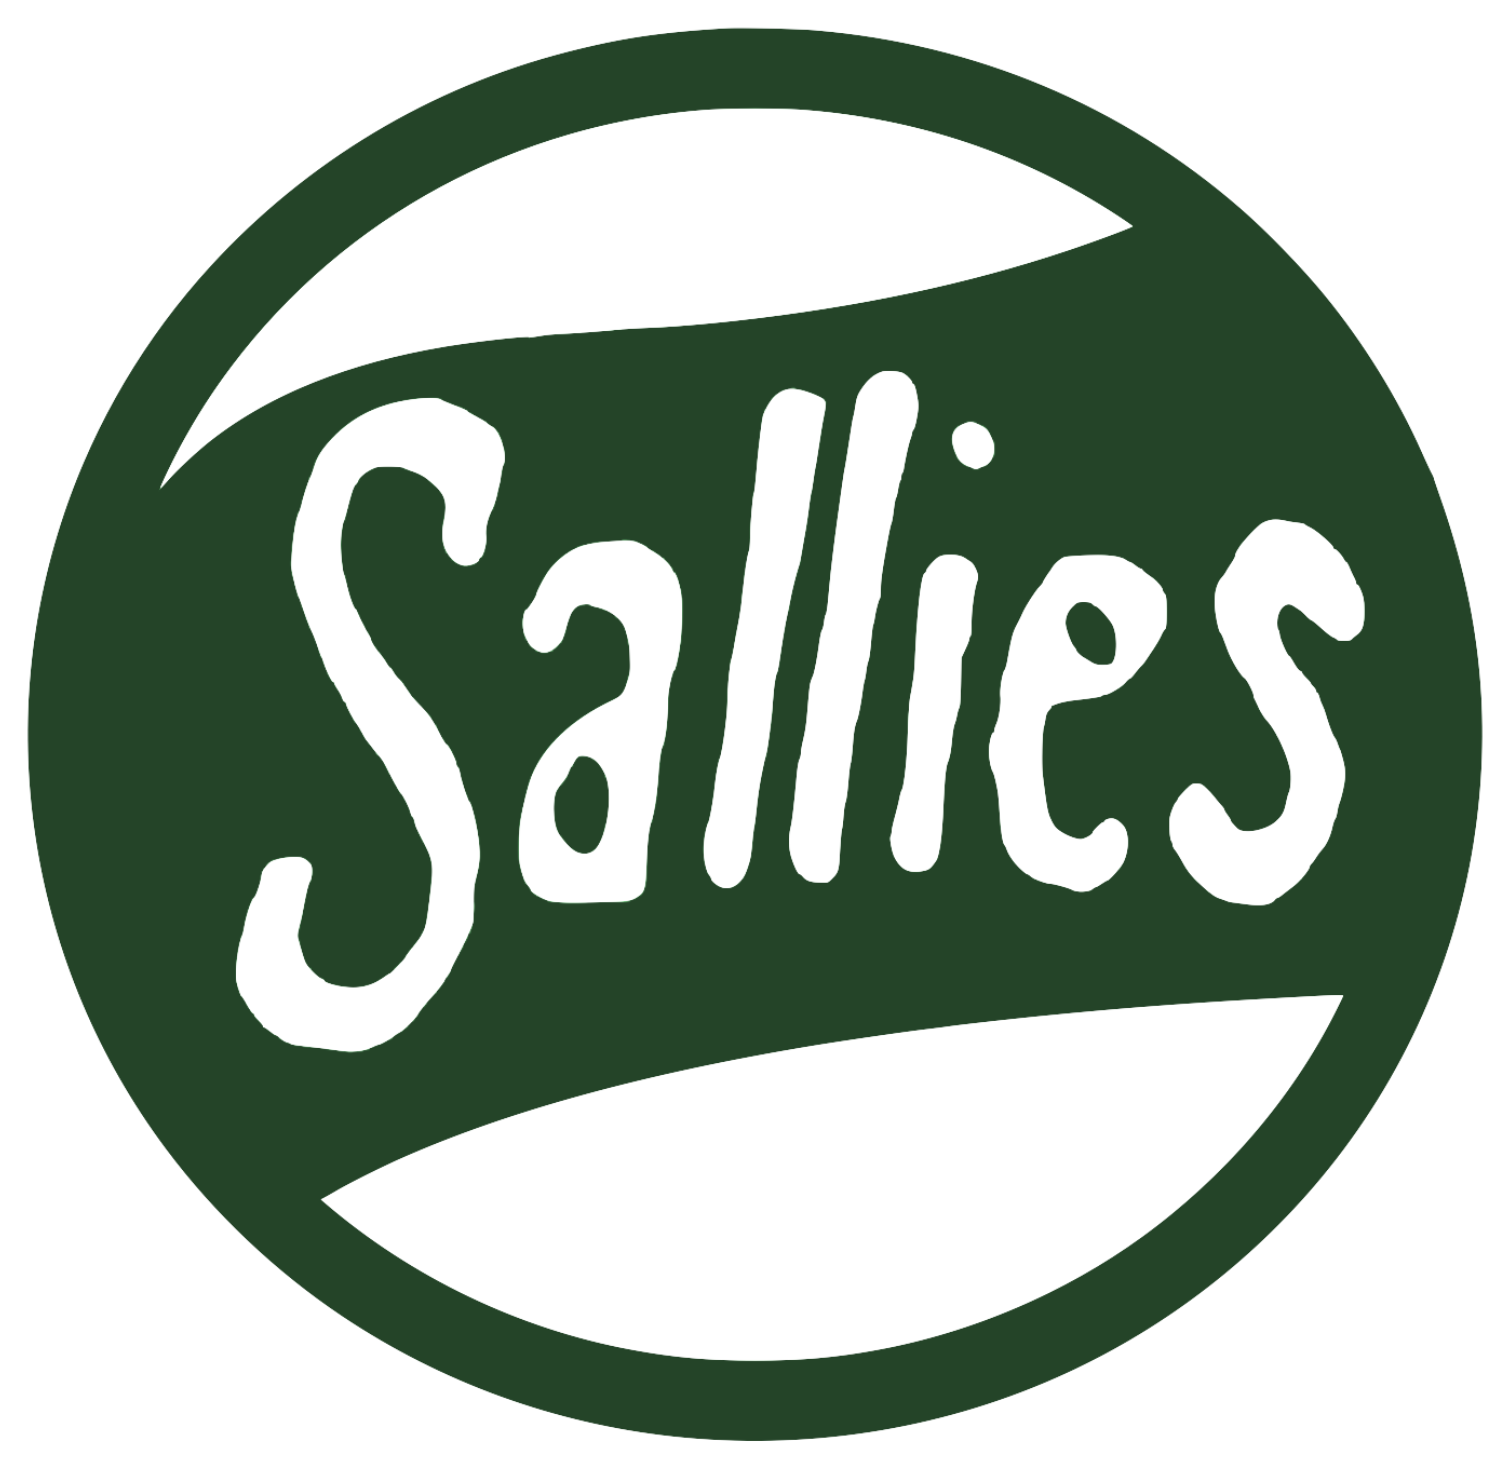 The Springfield Sallies